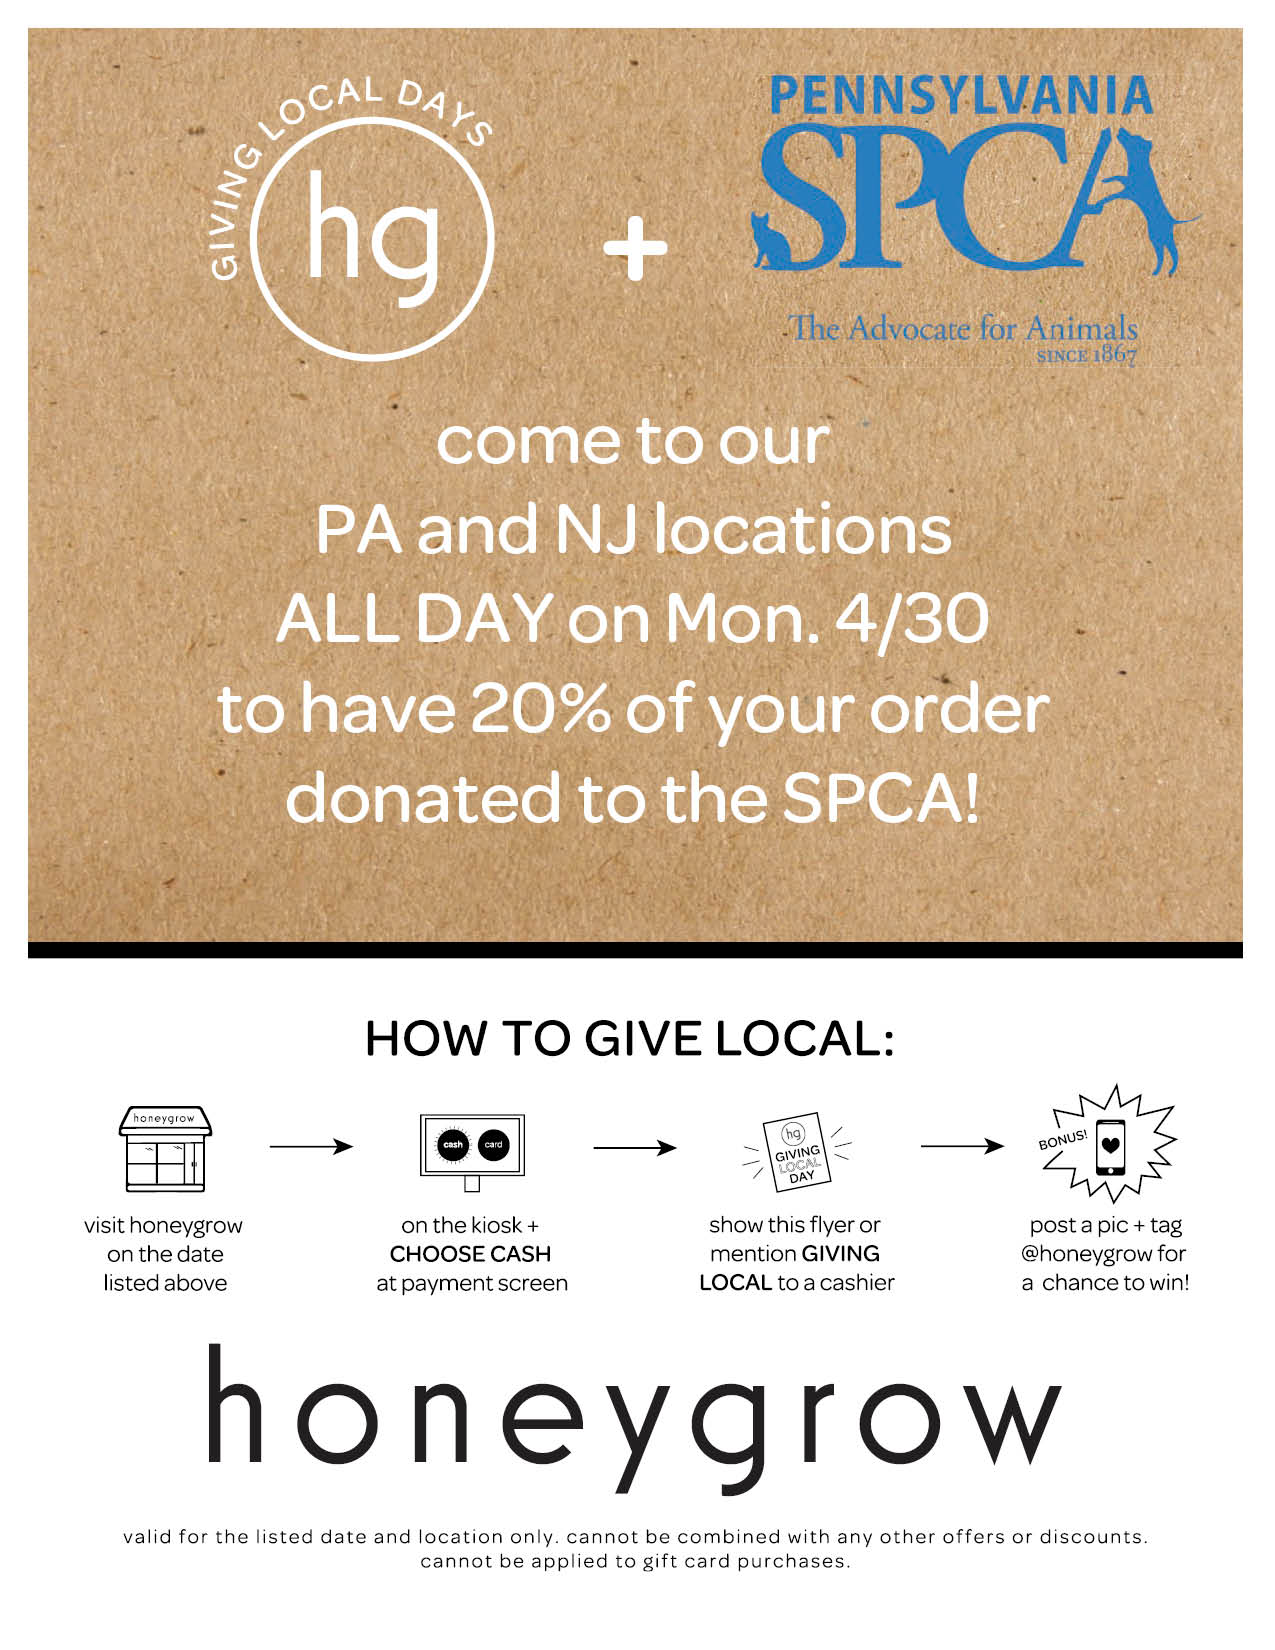 honeygrow giving local for PSPCA